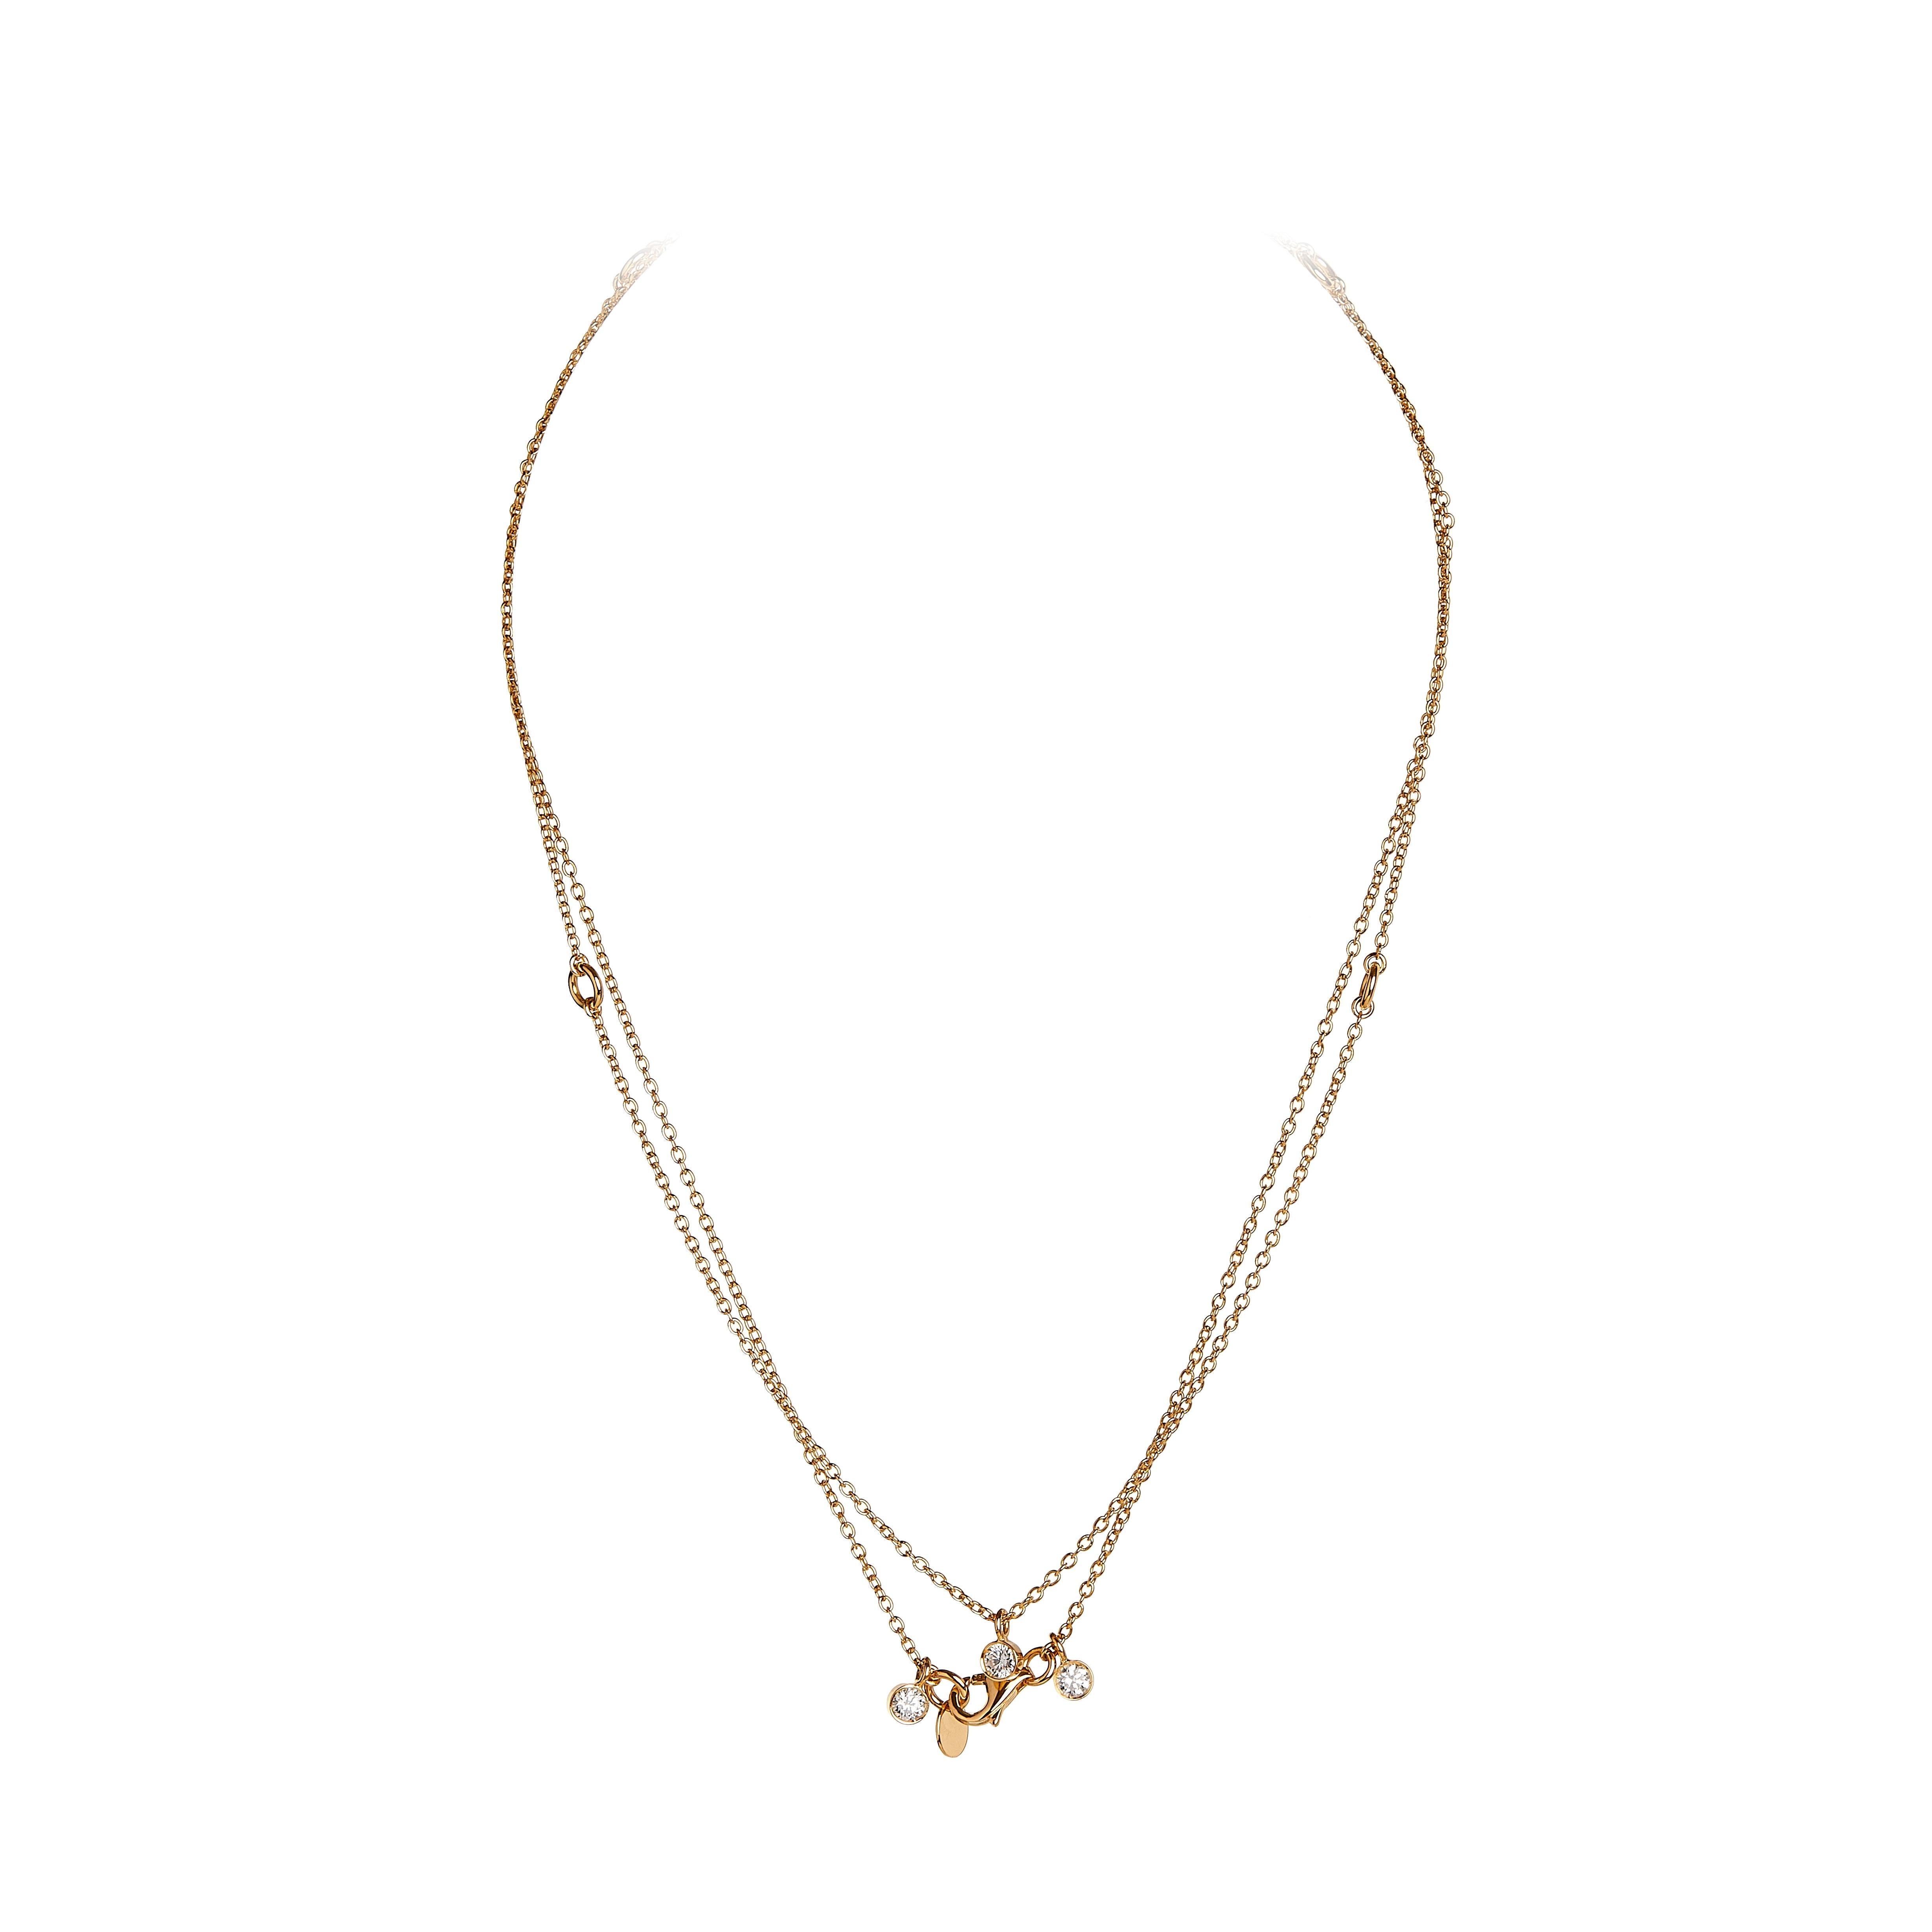 Nathalie Jean Contemporary 0.33 Carat Diamond Gold Pendant Chain Necklace For Sale 6